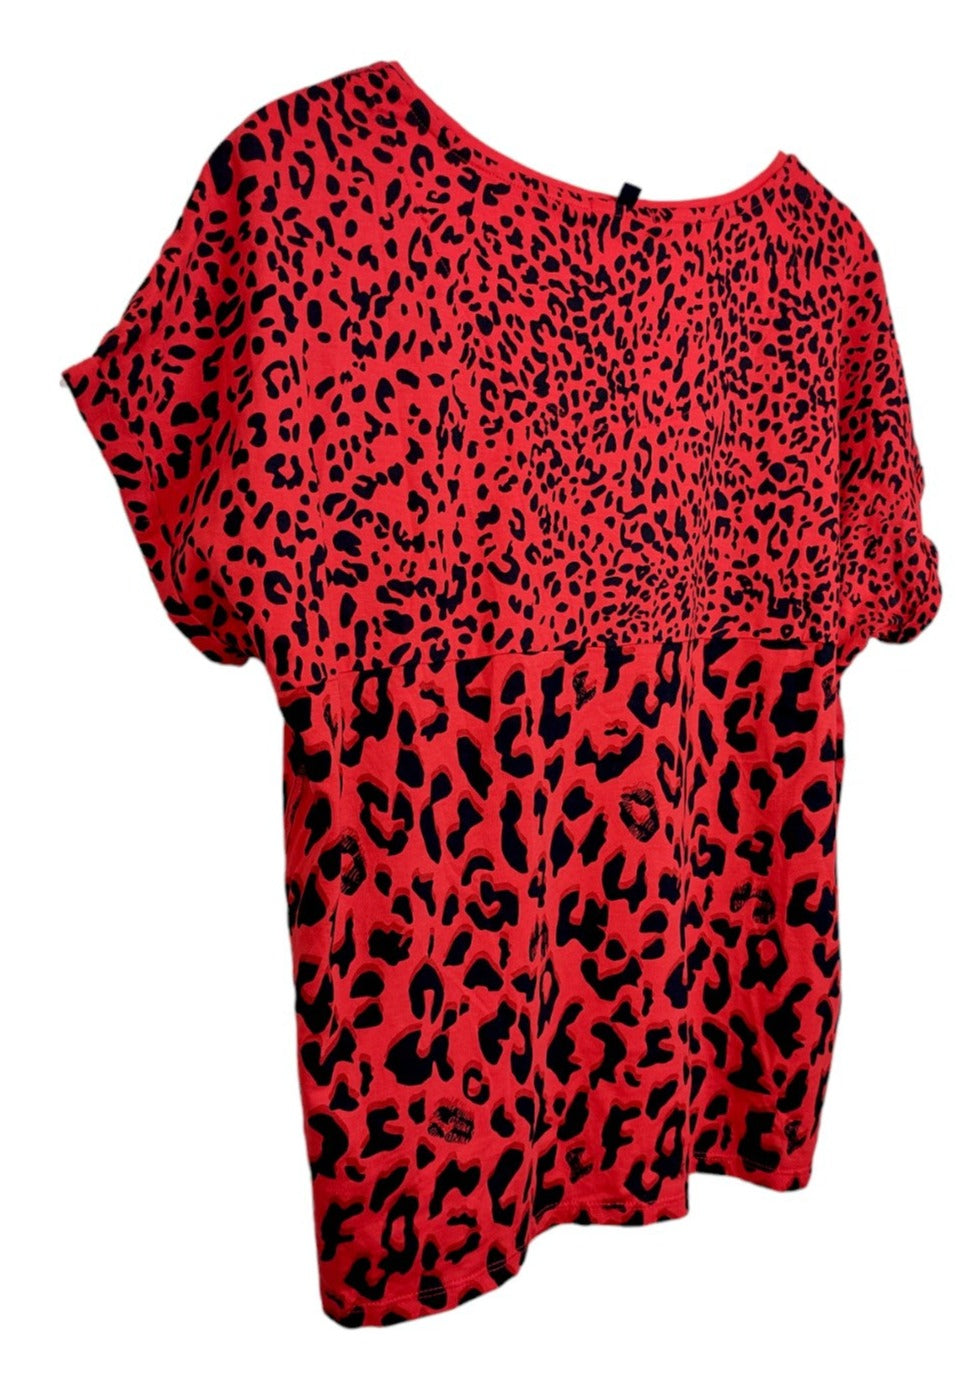 Stock, Animal Print Γυναικεία Μπλούζα σε Κοραλί χρώμα (L/XL)